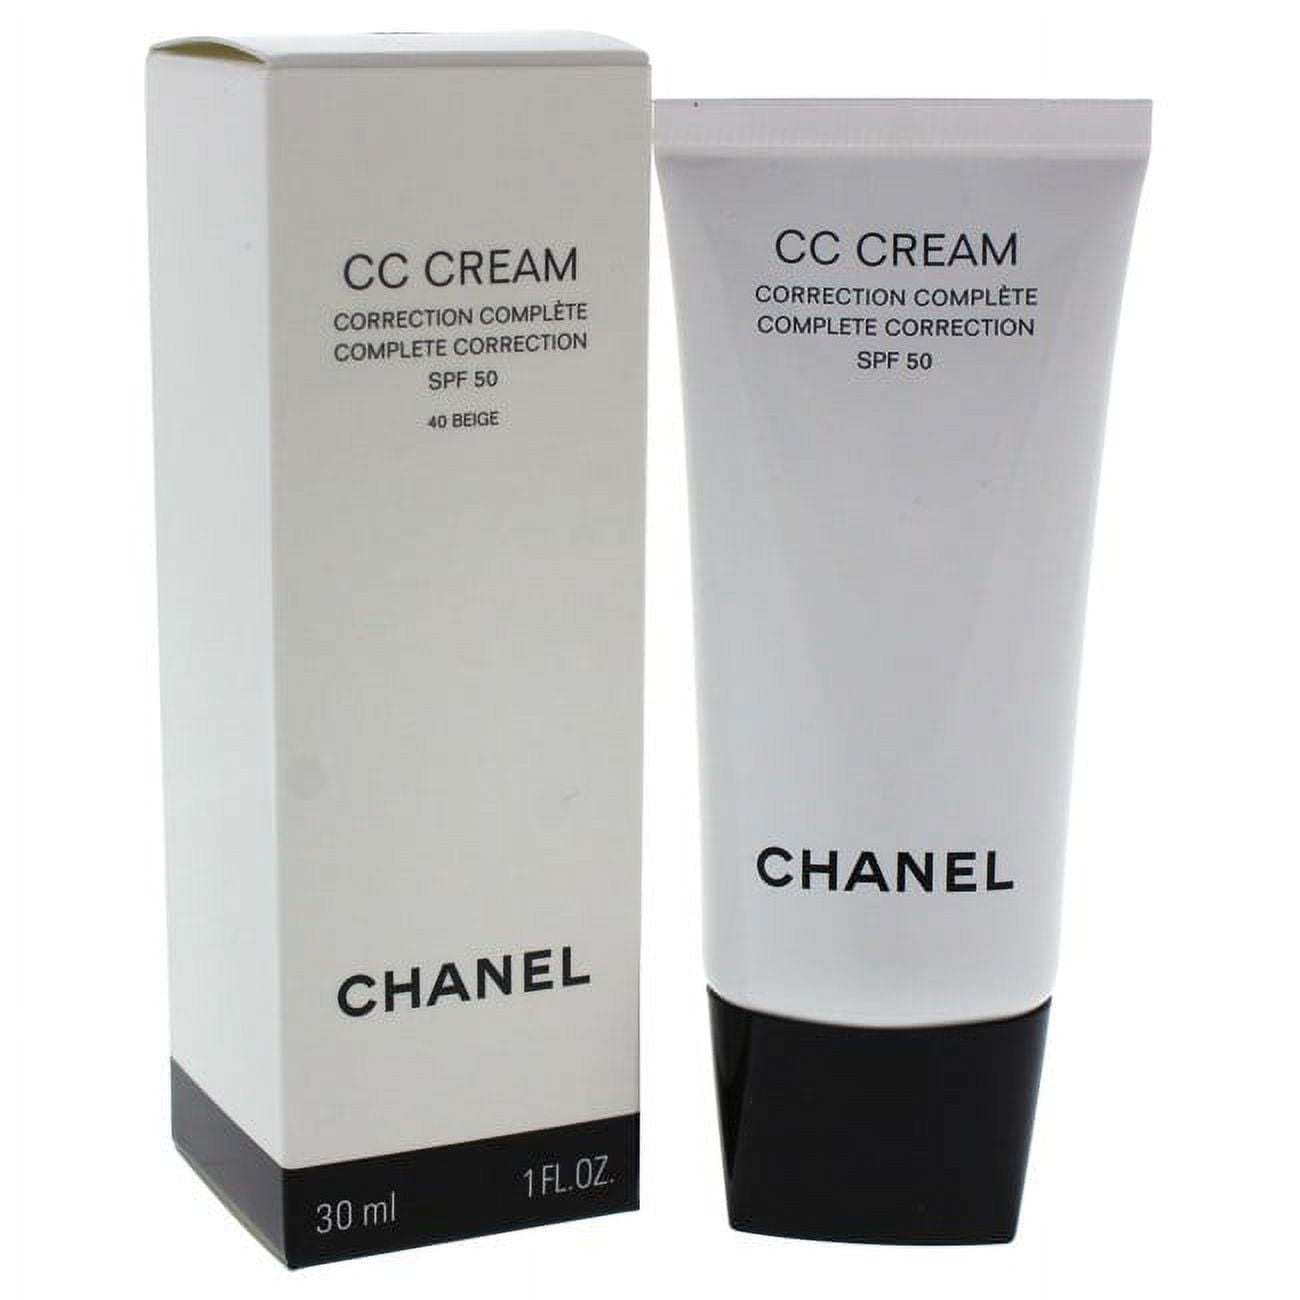 Chanel CC Cream in code 10 Beige